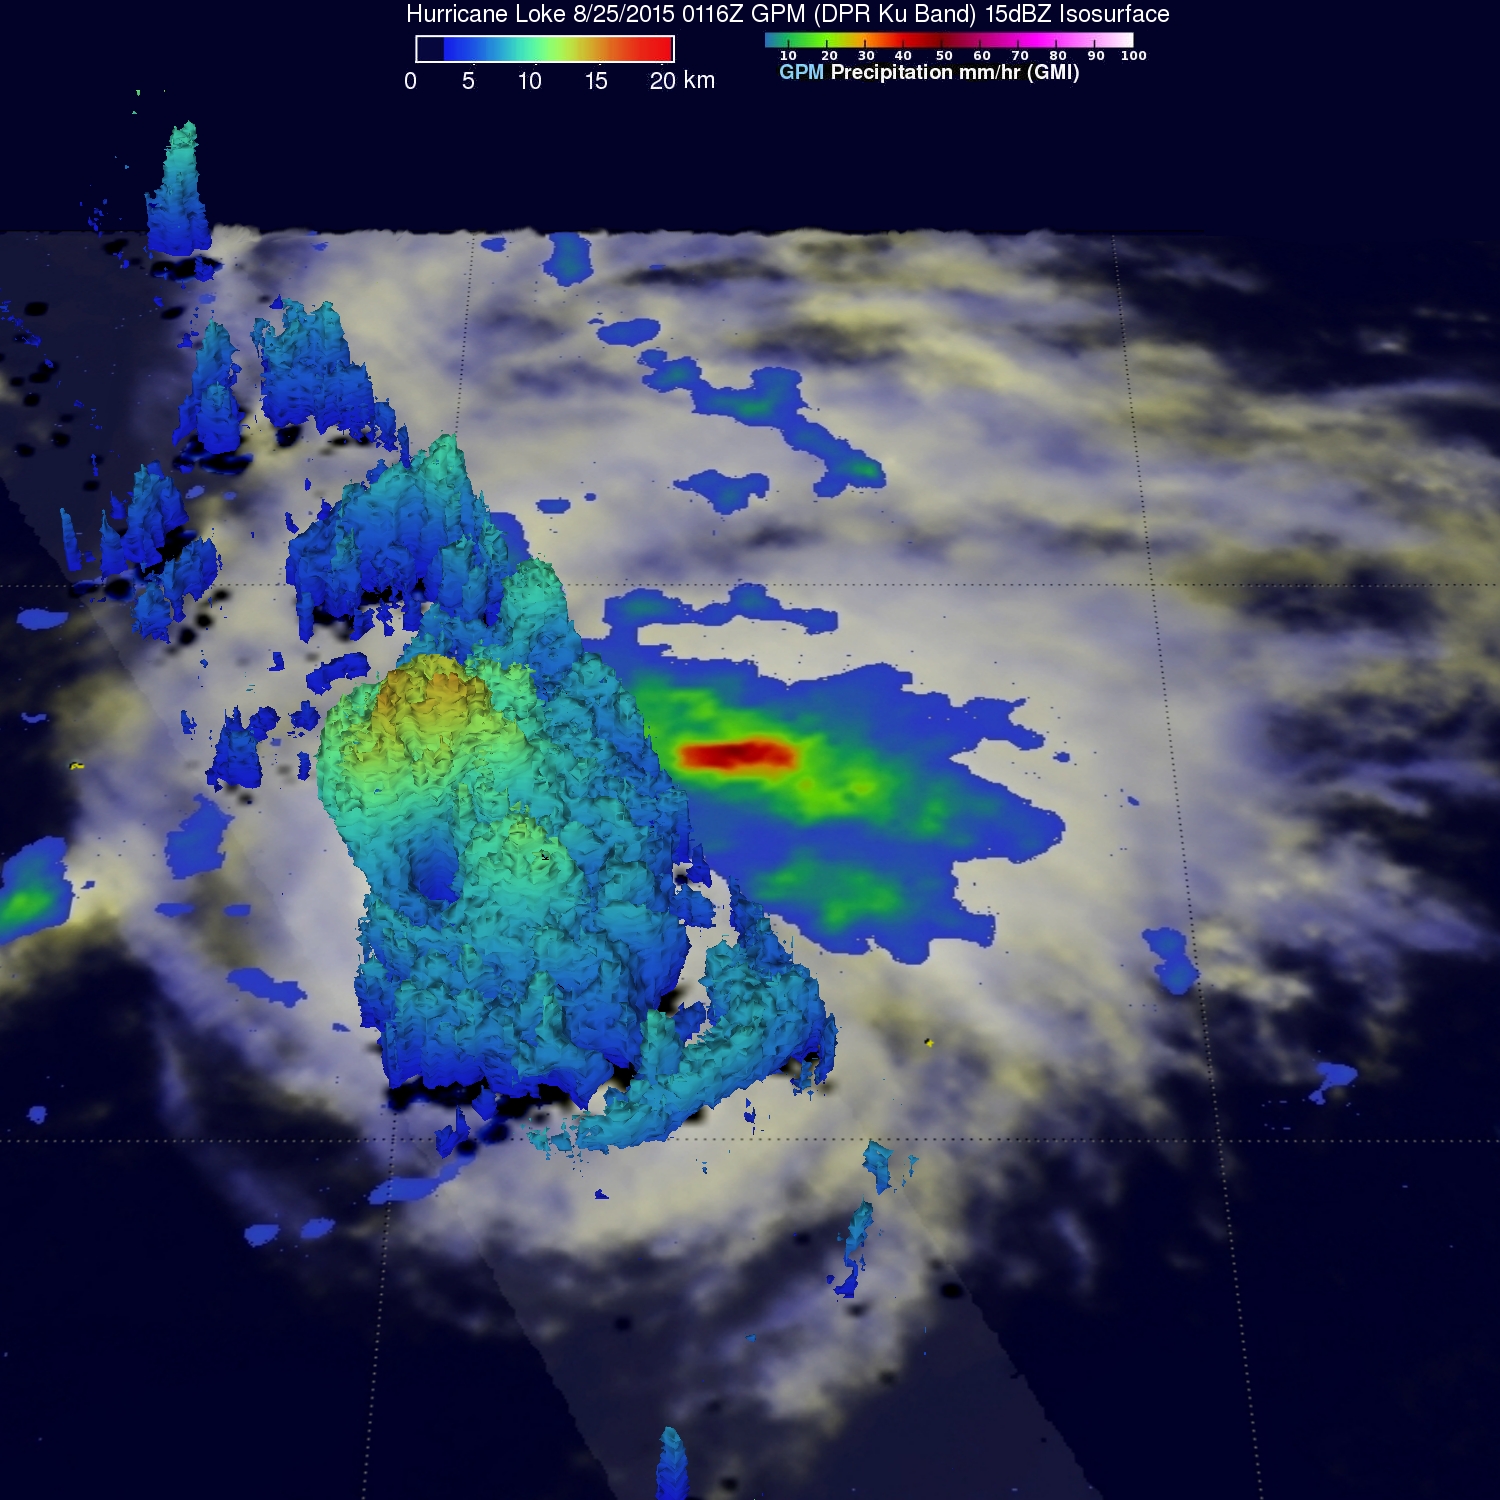 Hurricane Loke Viewed By GPM